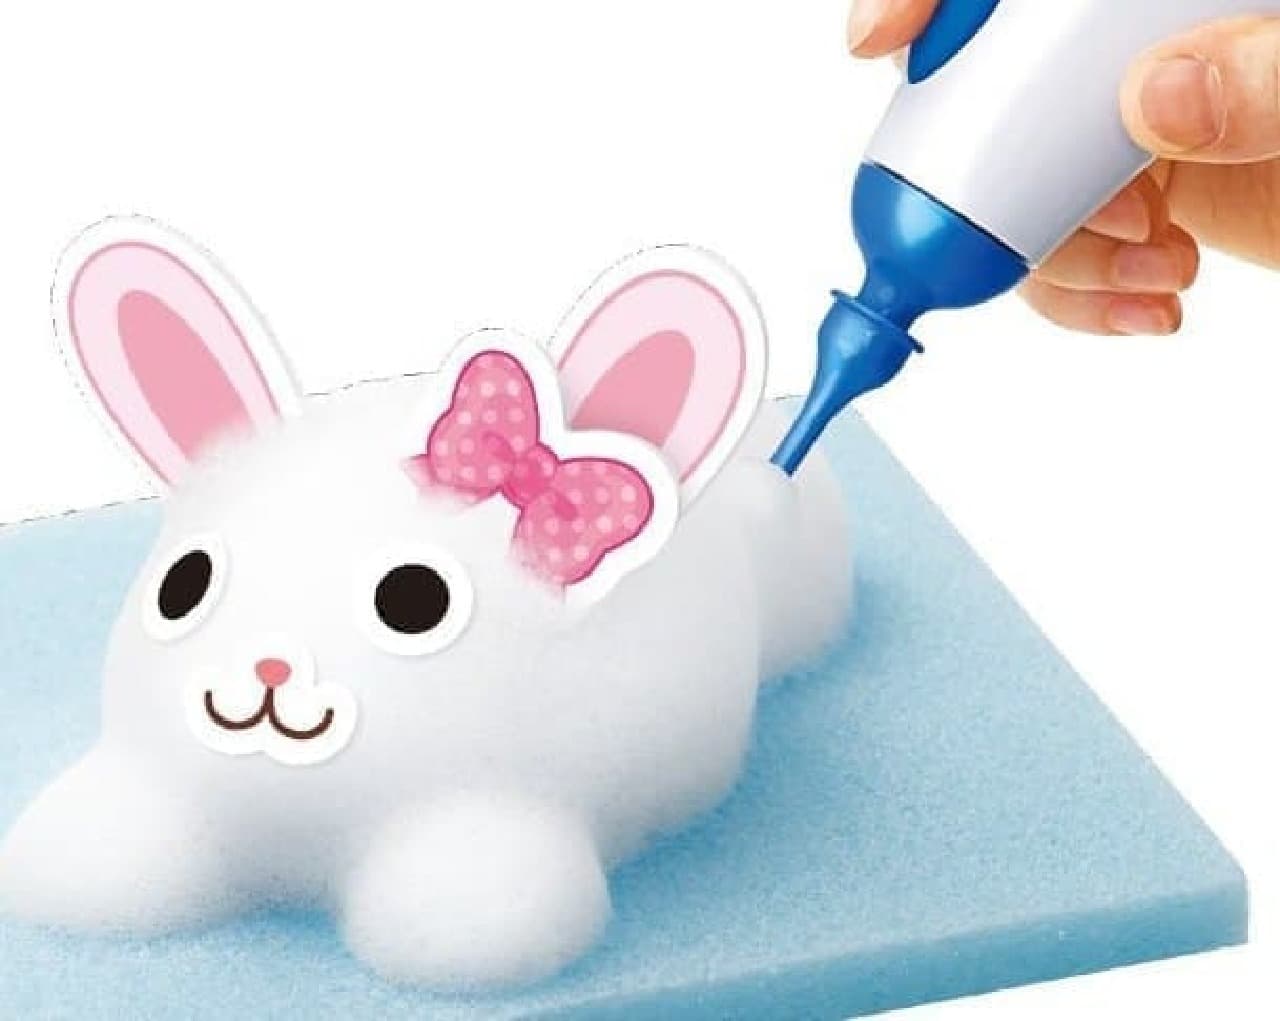 "Awamoko 3D Pen" where you can enjoy 3D art with hand soap